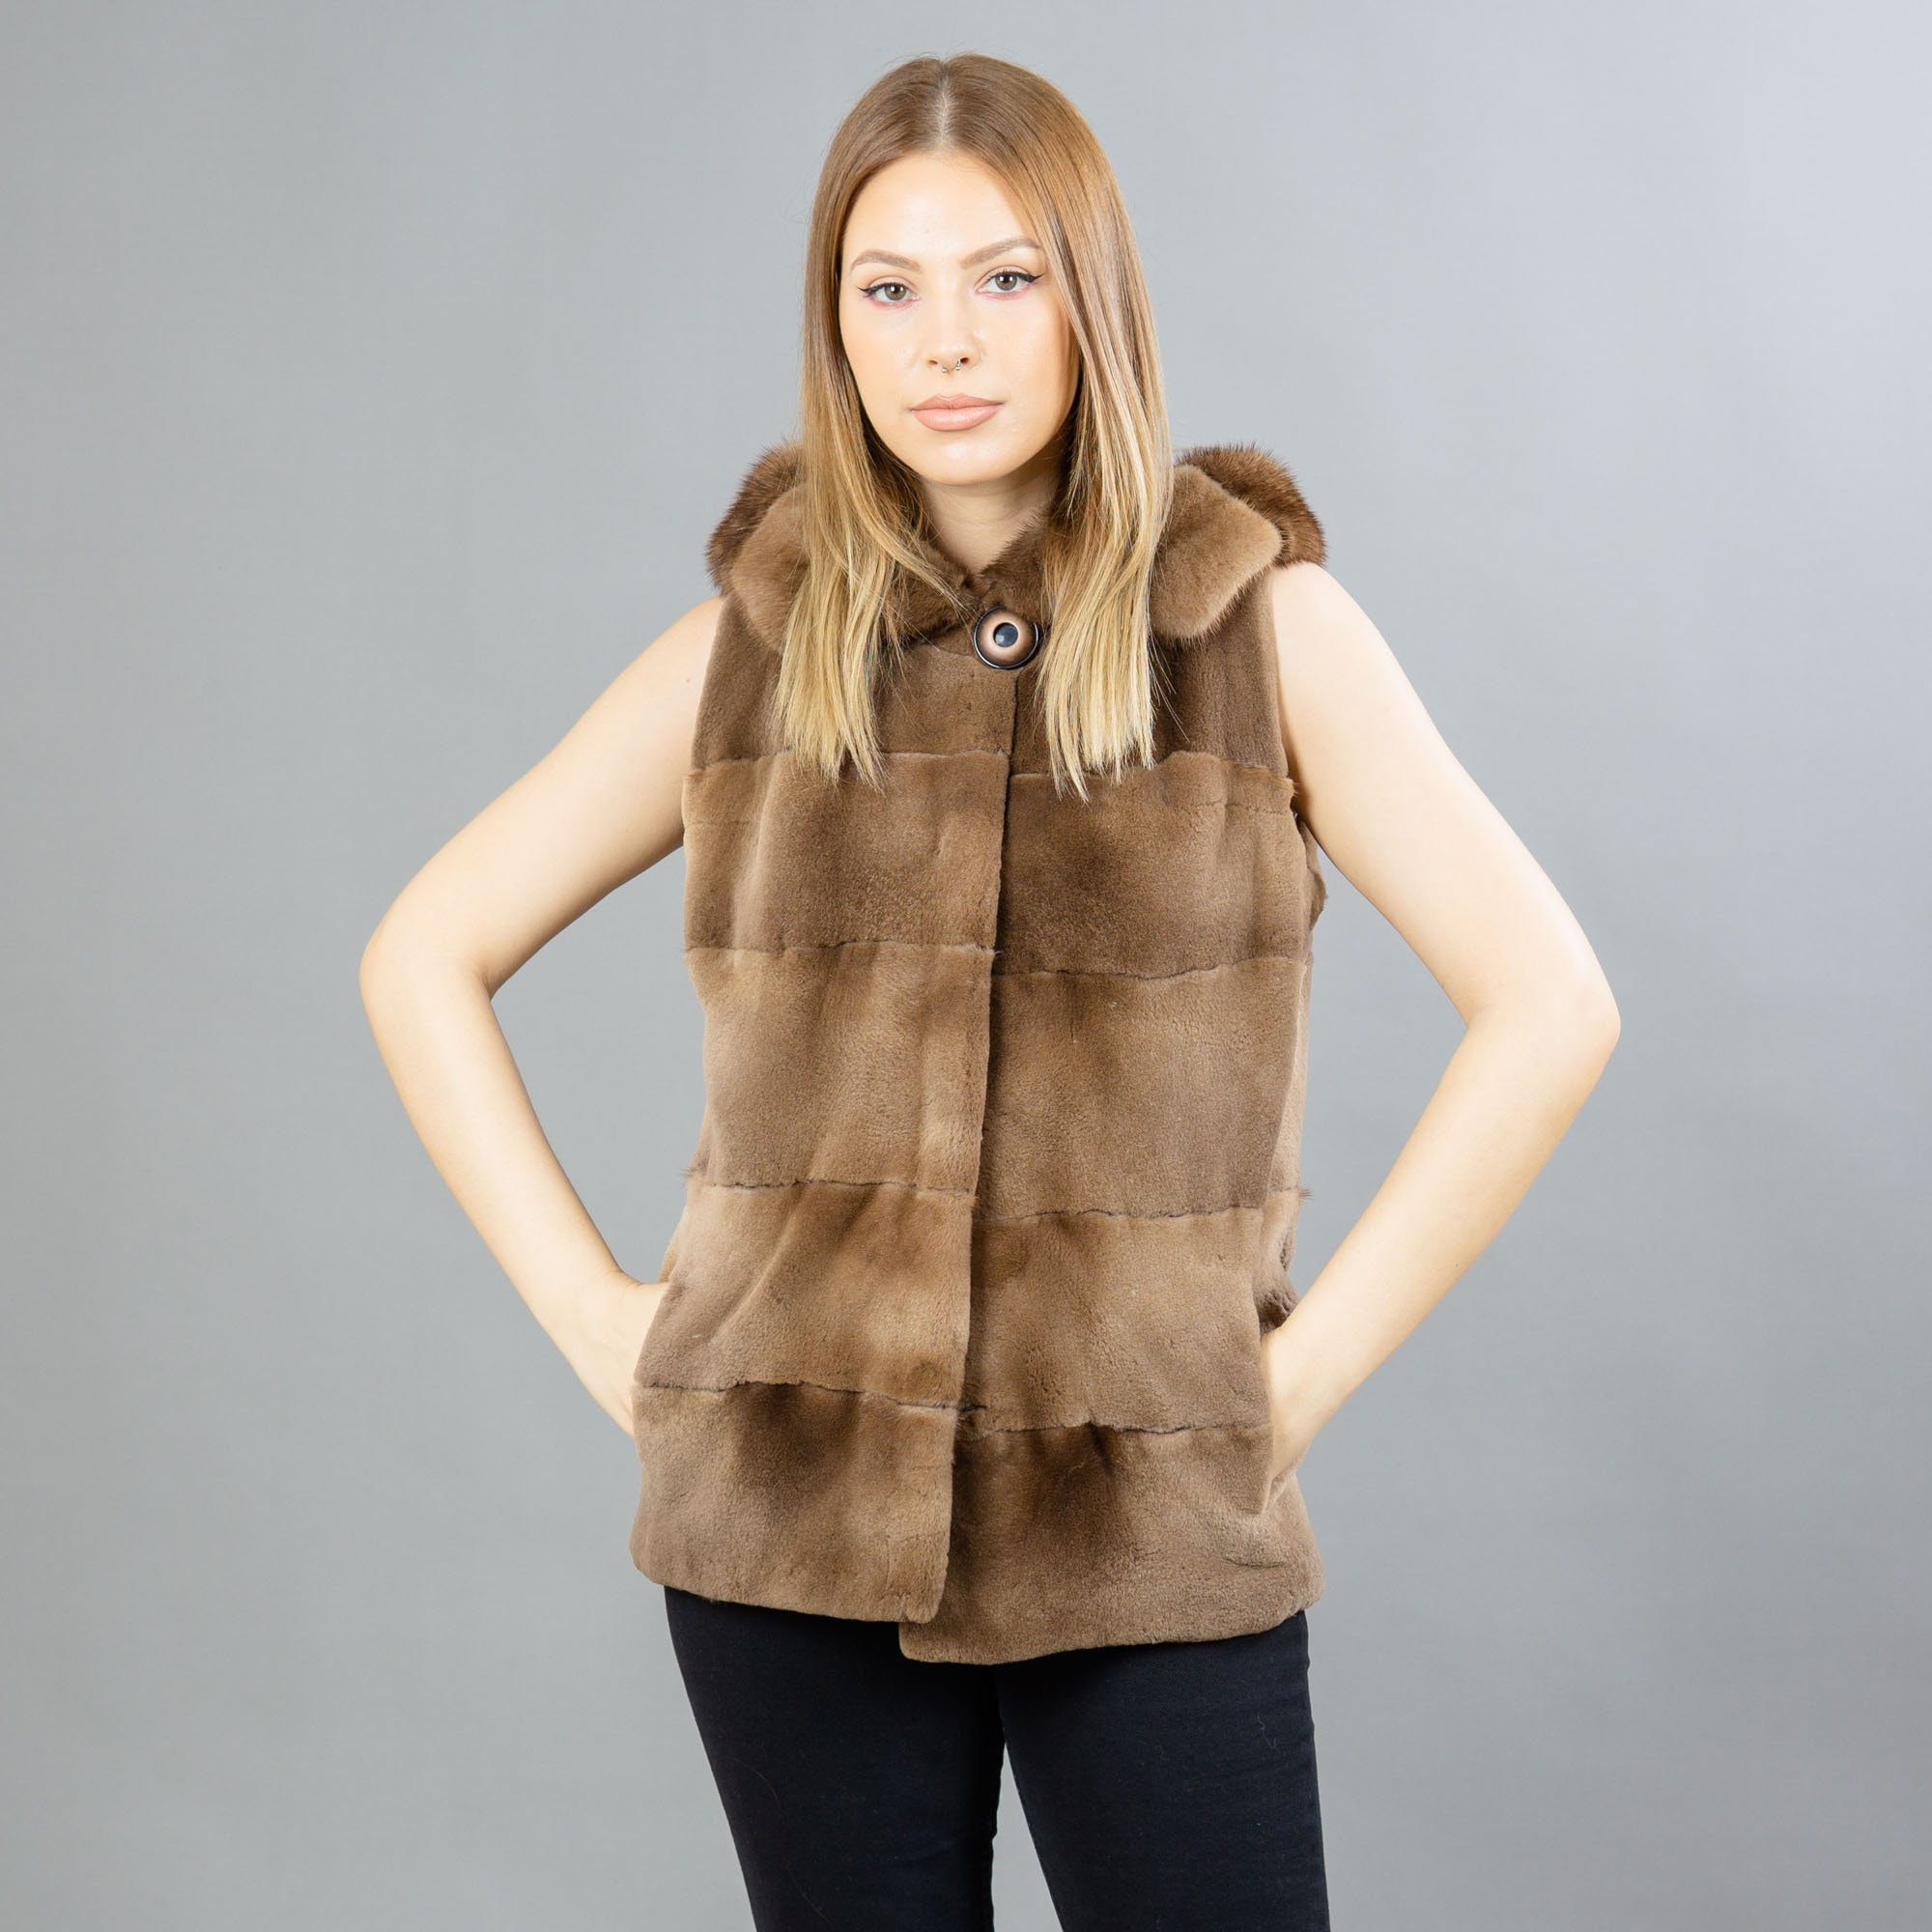 Women's Mink Fur Coats, Vests, and More